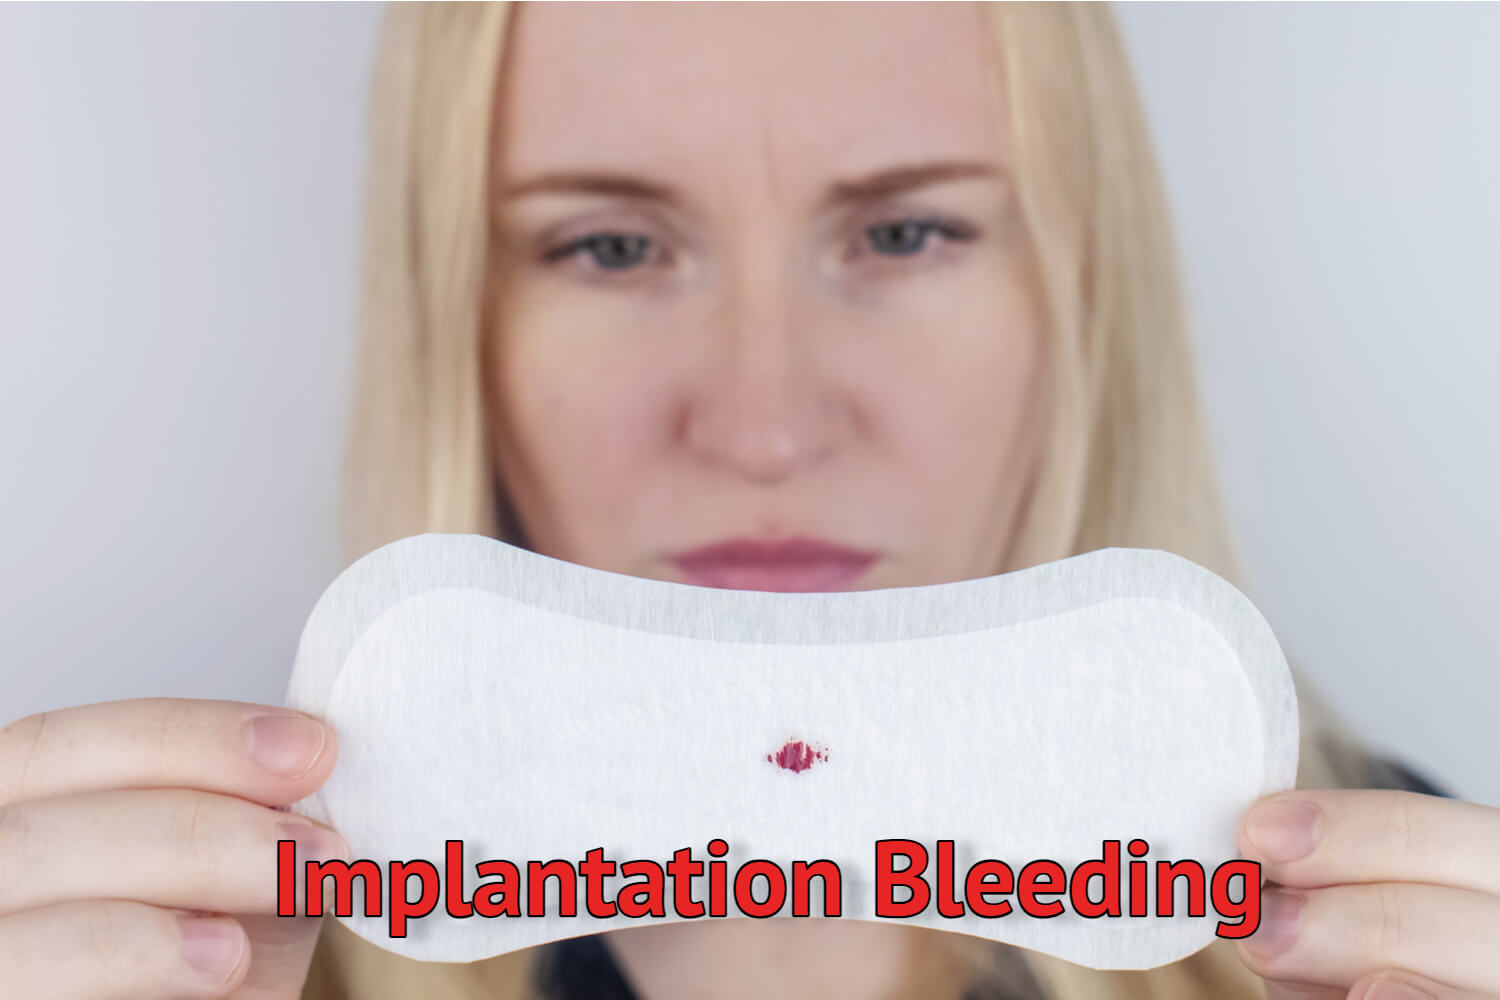 implantation-bleeding symptoms signs and treatment